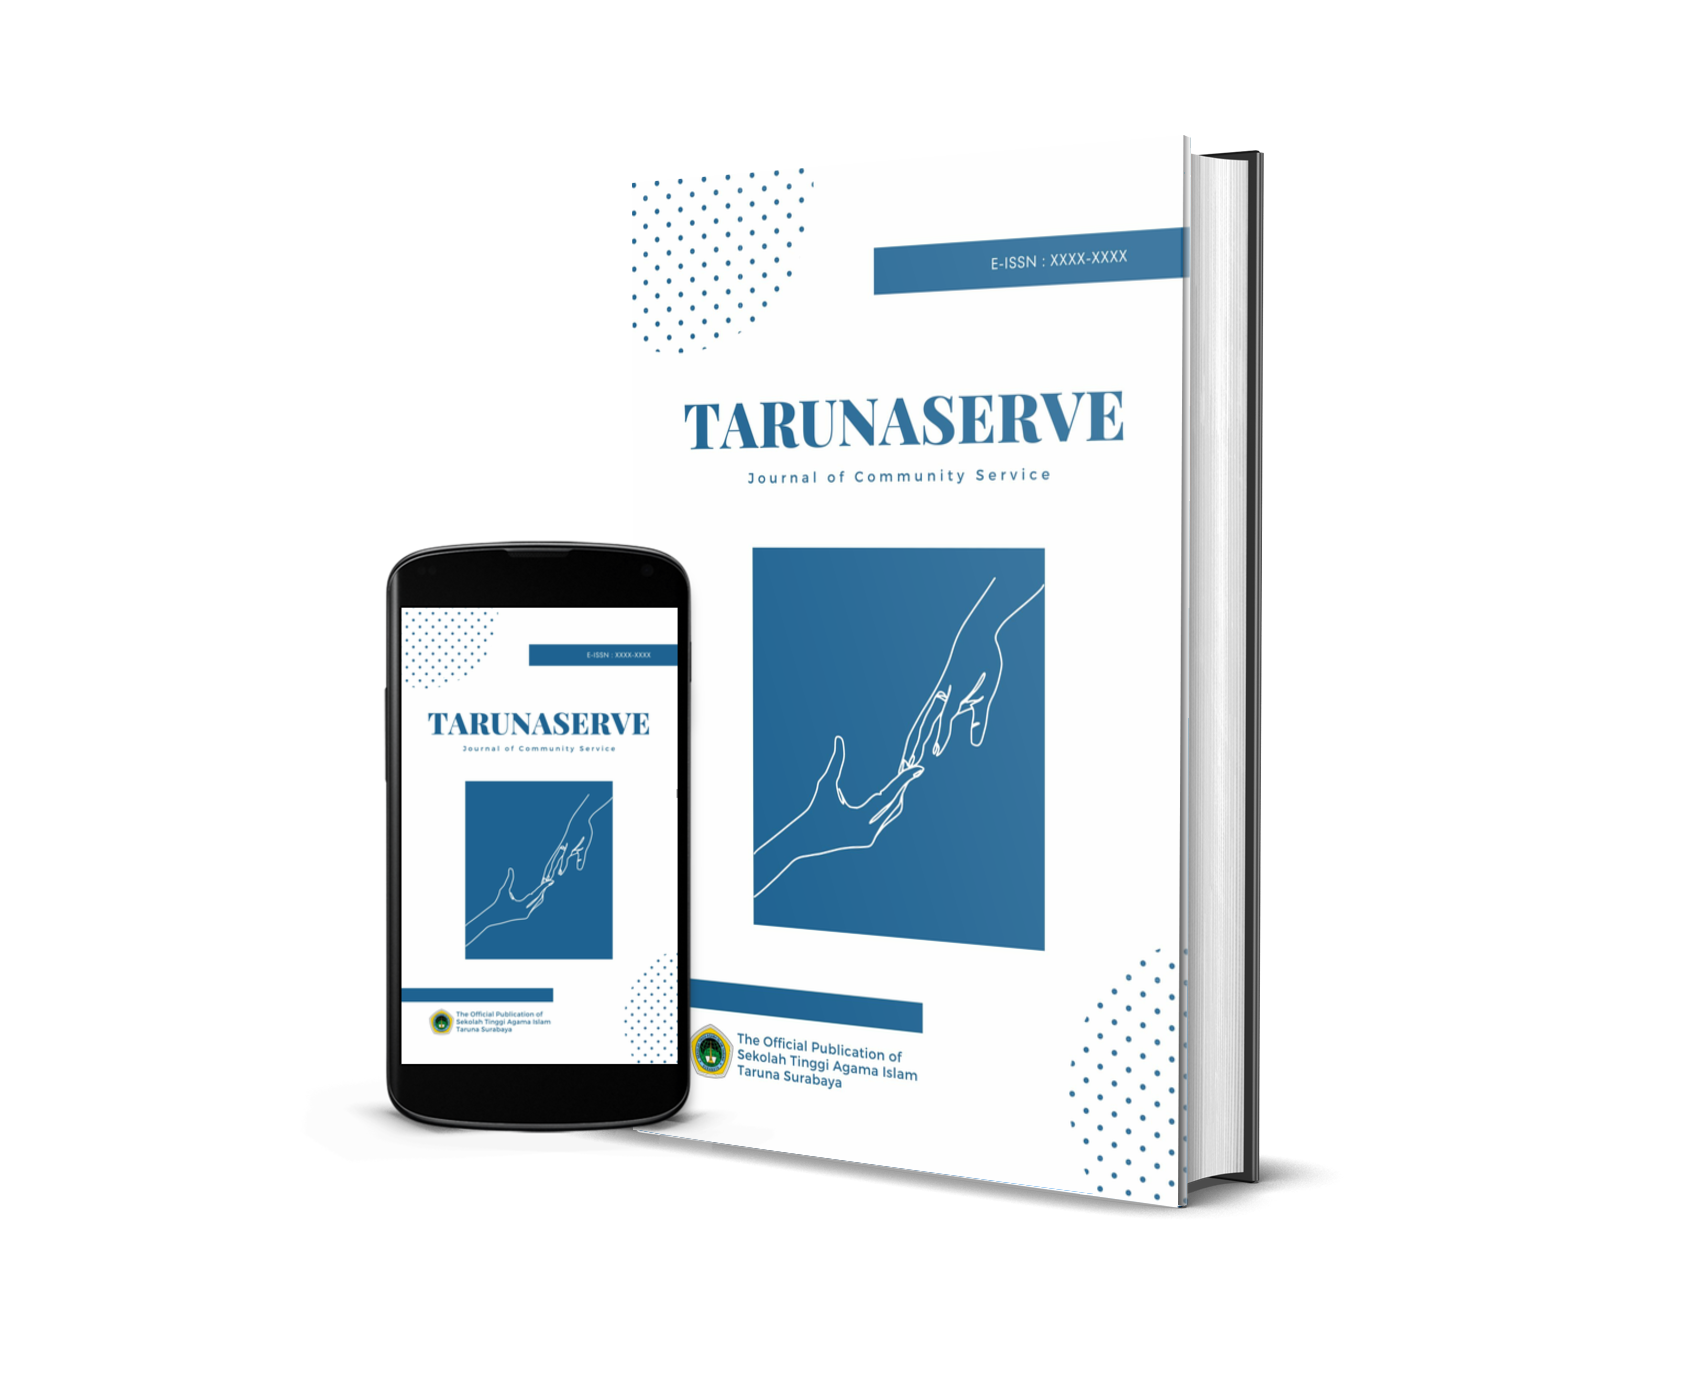  TARUNASERVE: Journal of Community Service